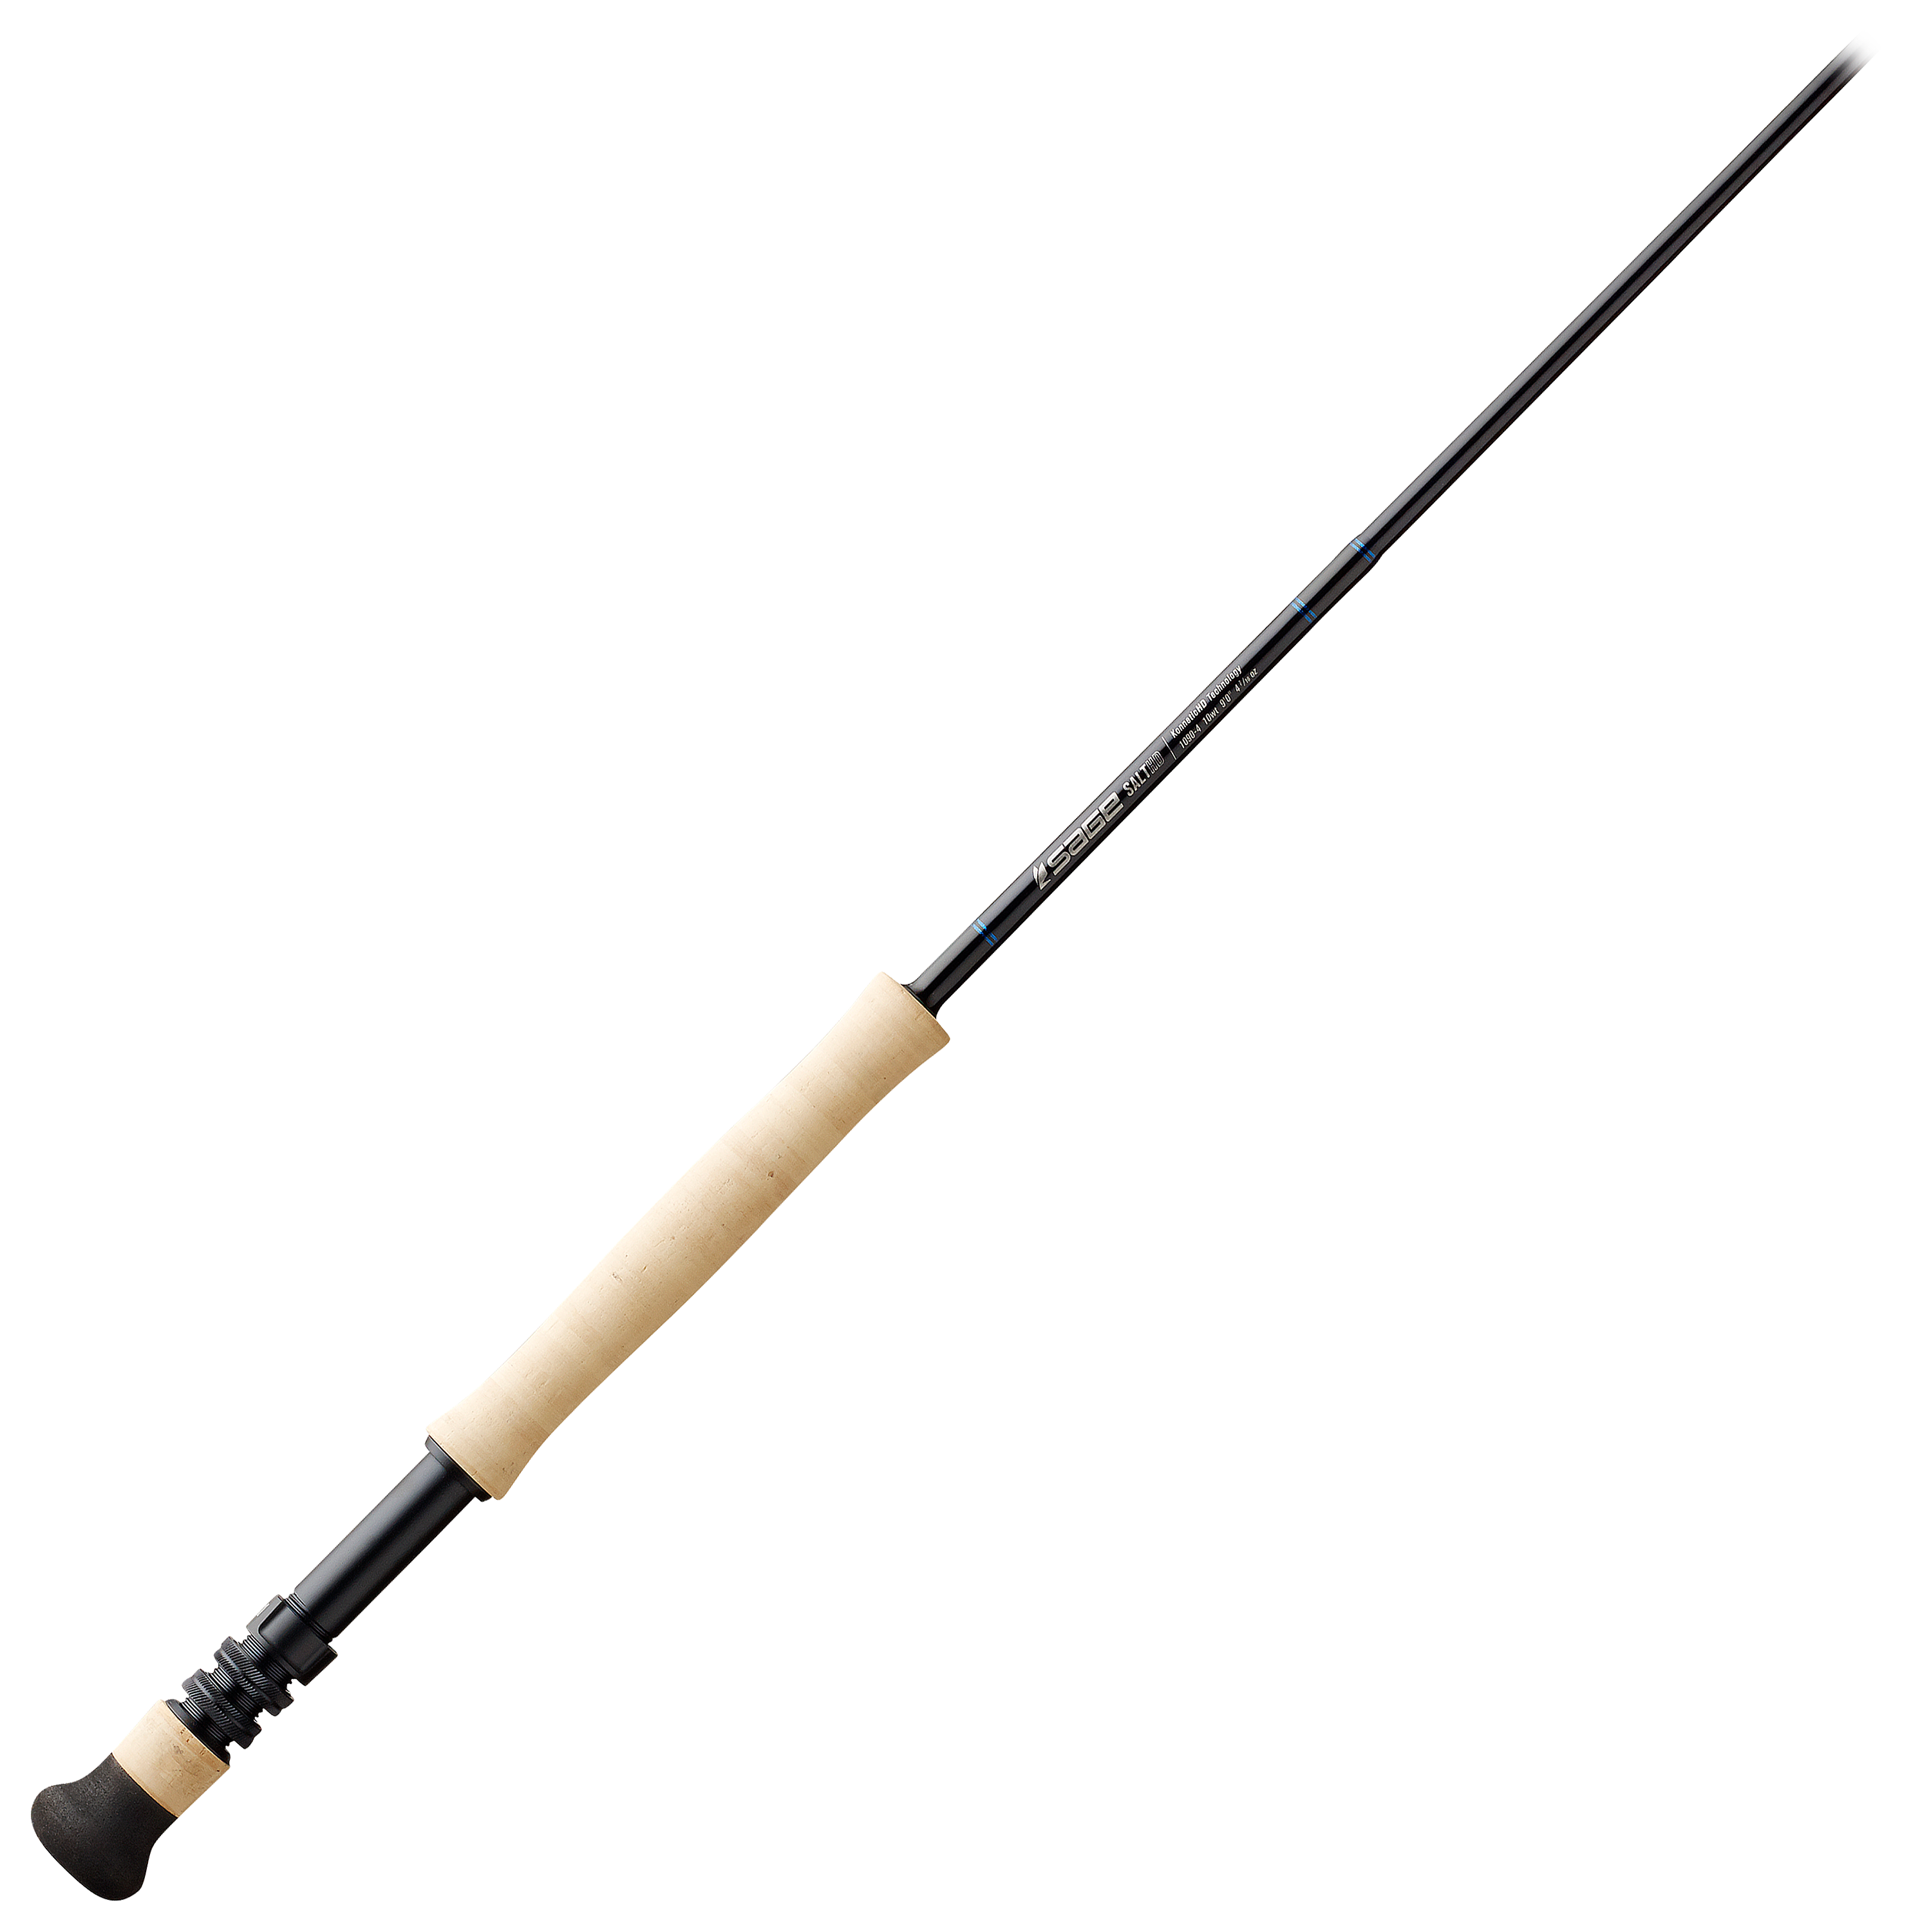 SAGE Salt HD 10wt 9'0 1090-4 Fly Fishing Rod